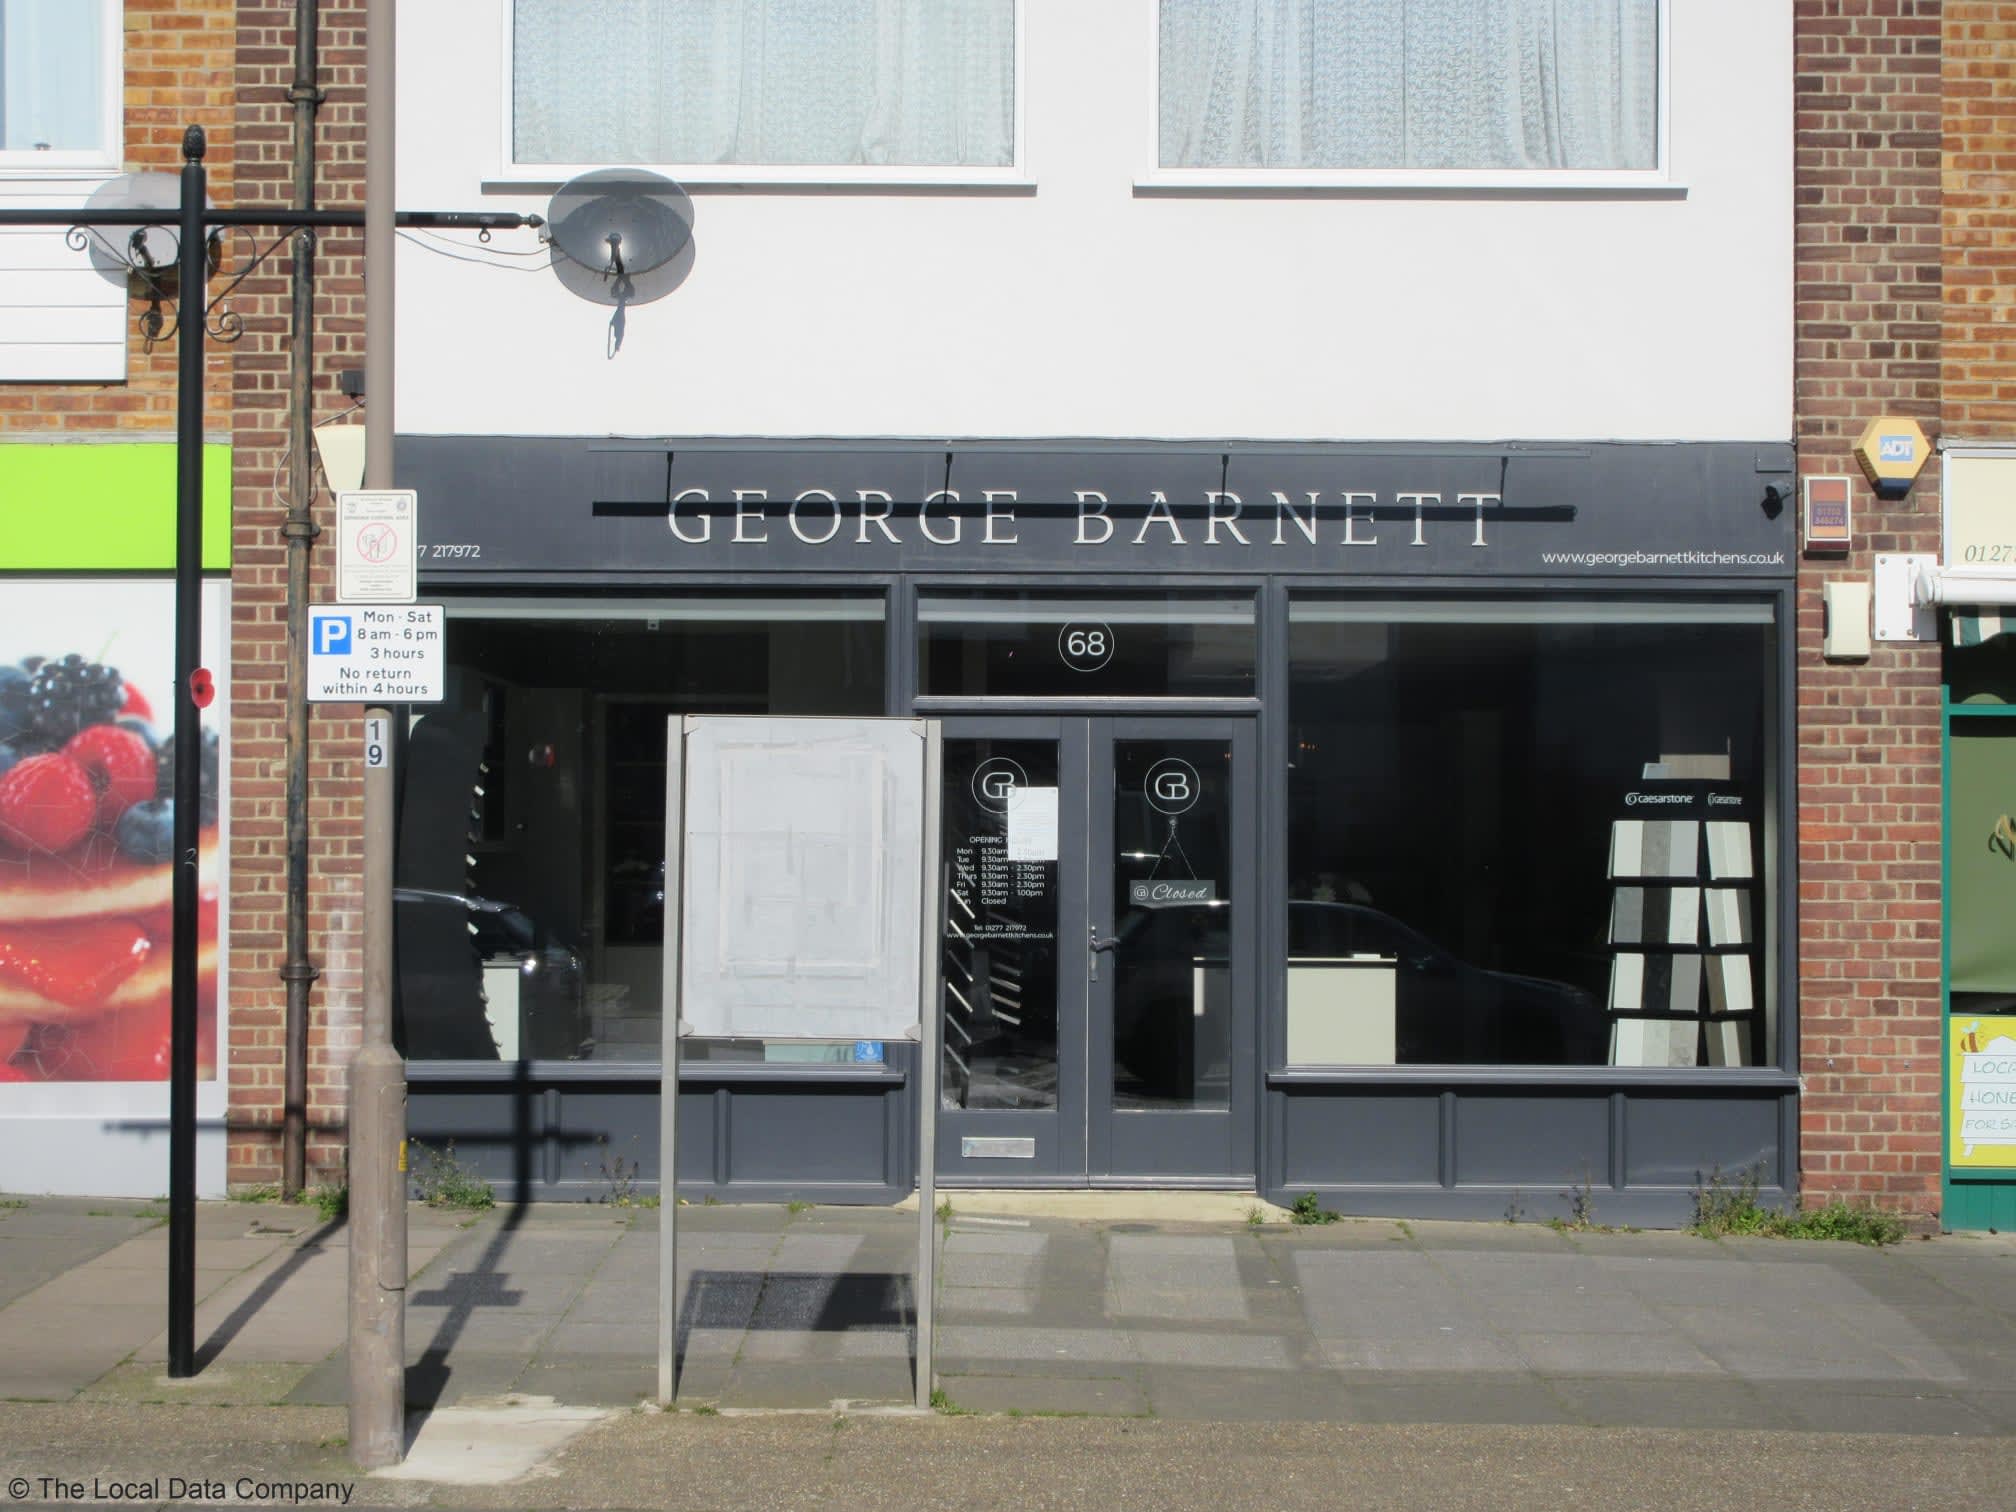 Images George Barnett Kitchens Ltd